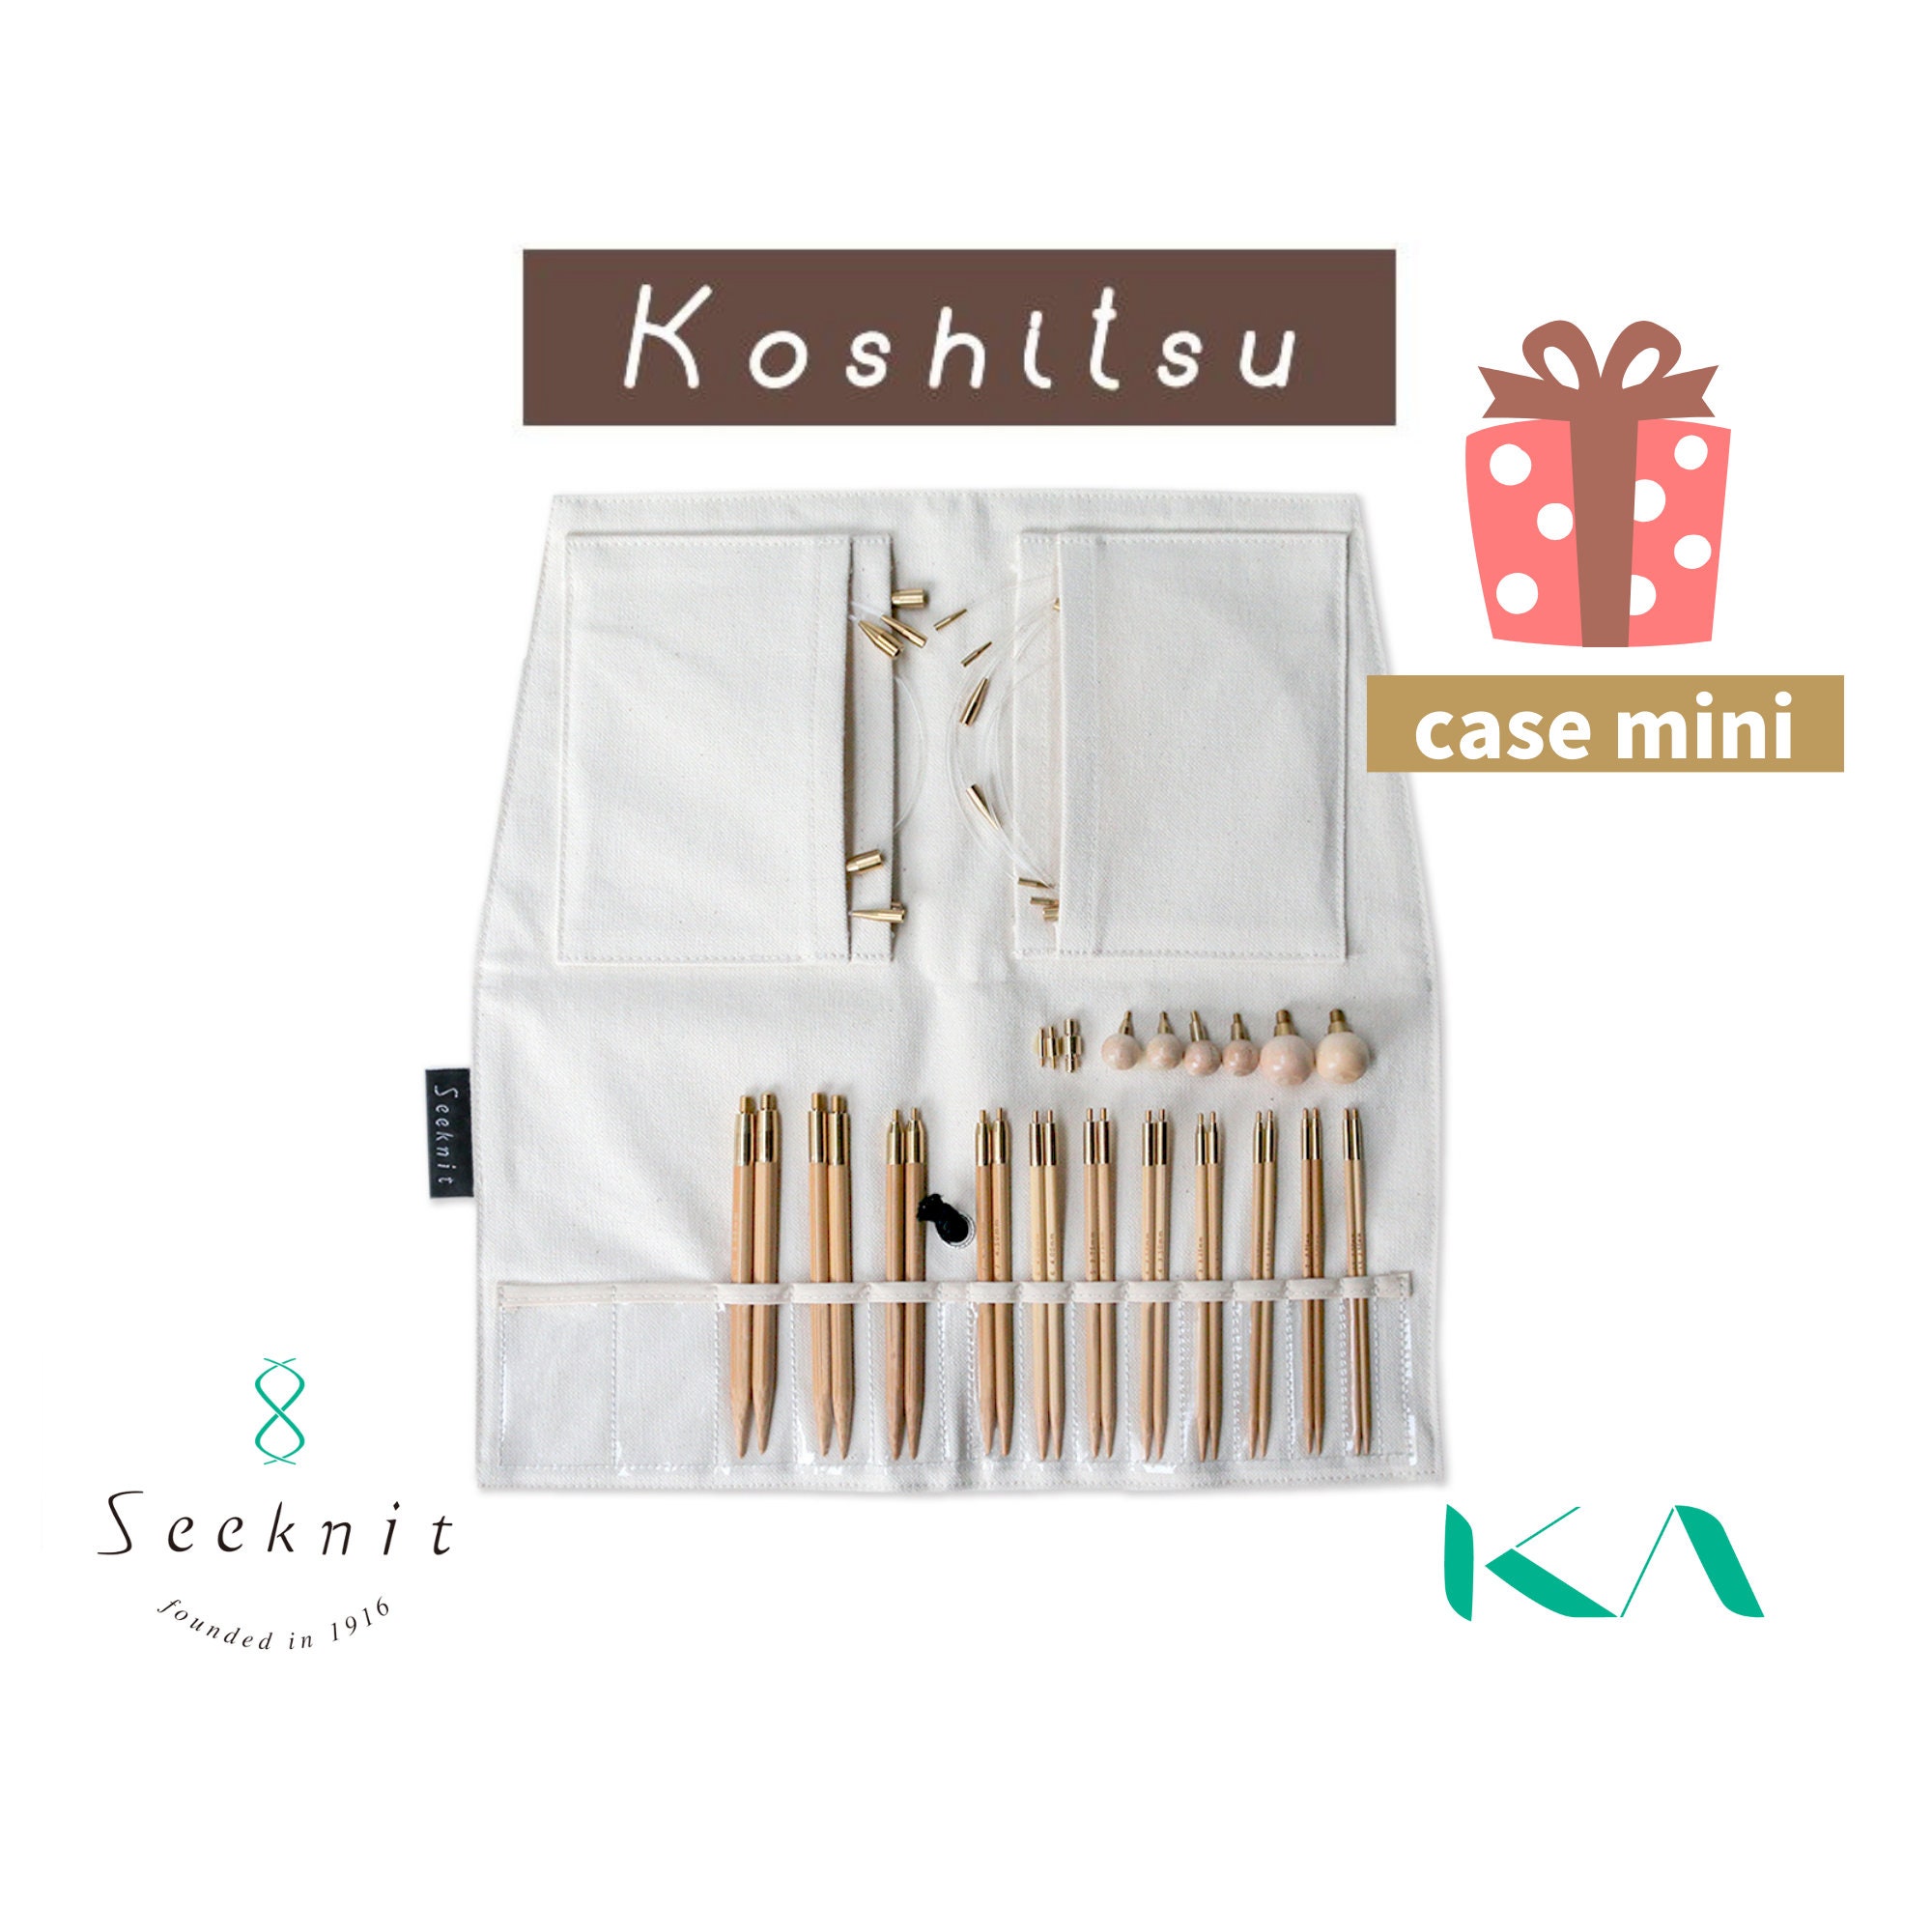 Buy SeeKnit Cable needle Koshitsou, find nearest shop here.